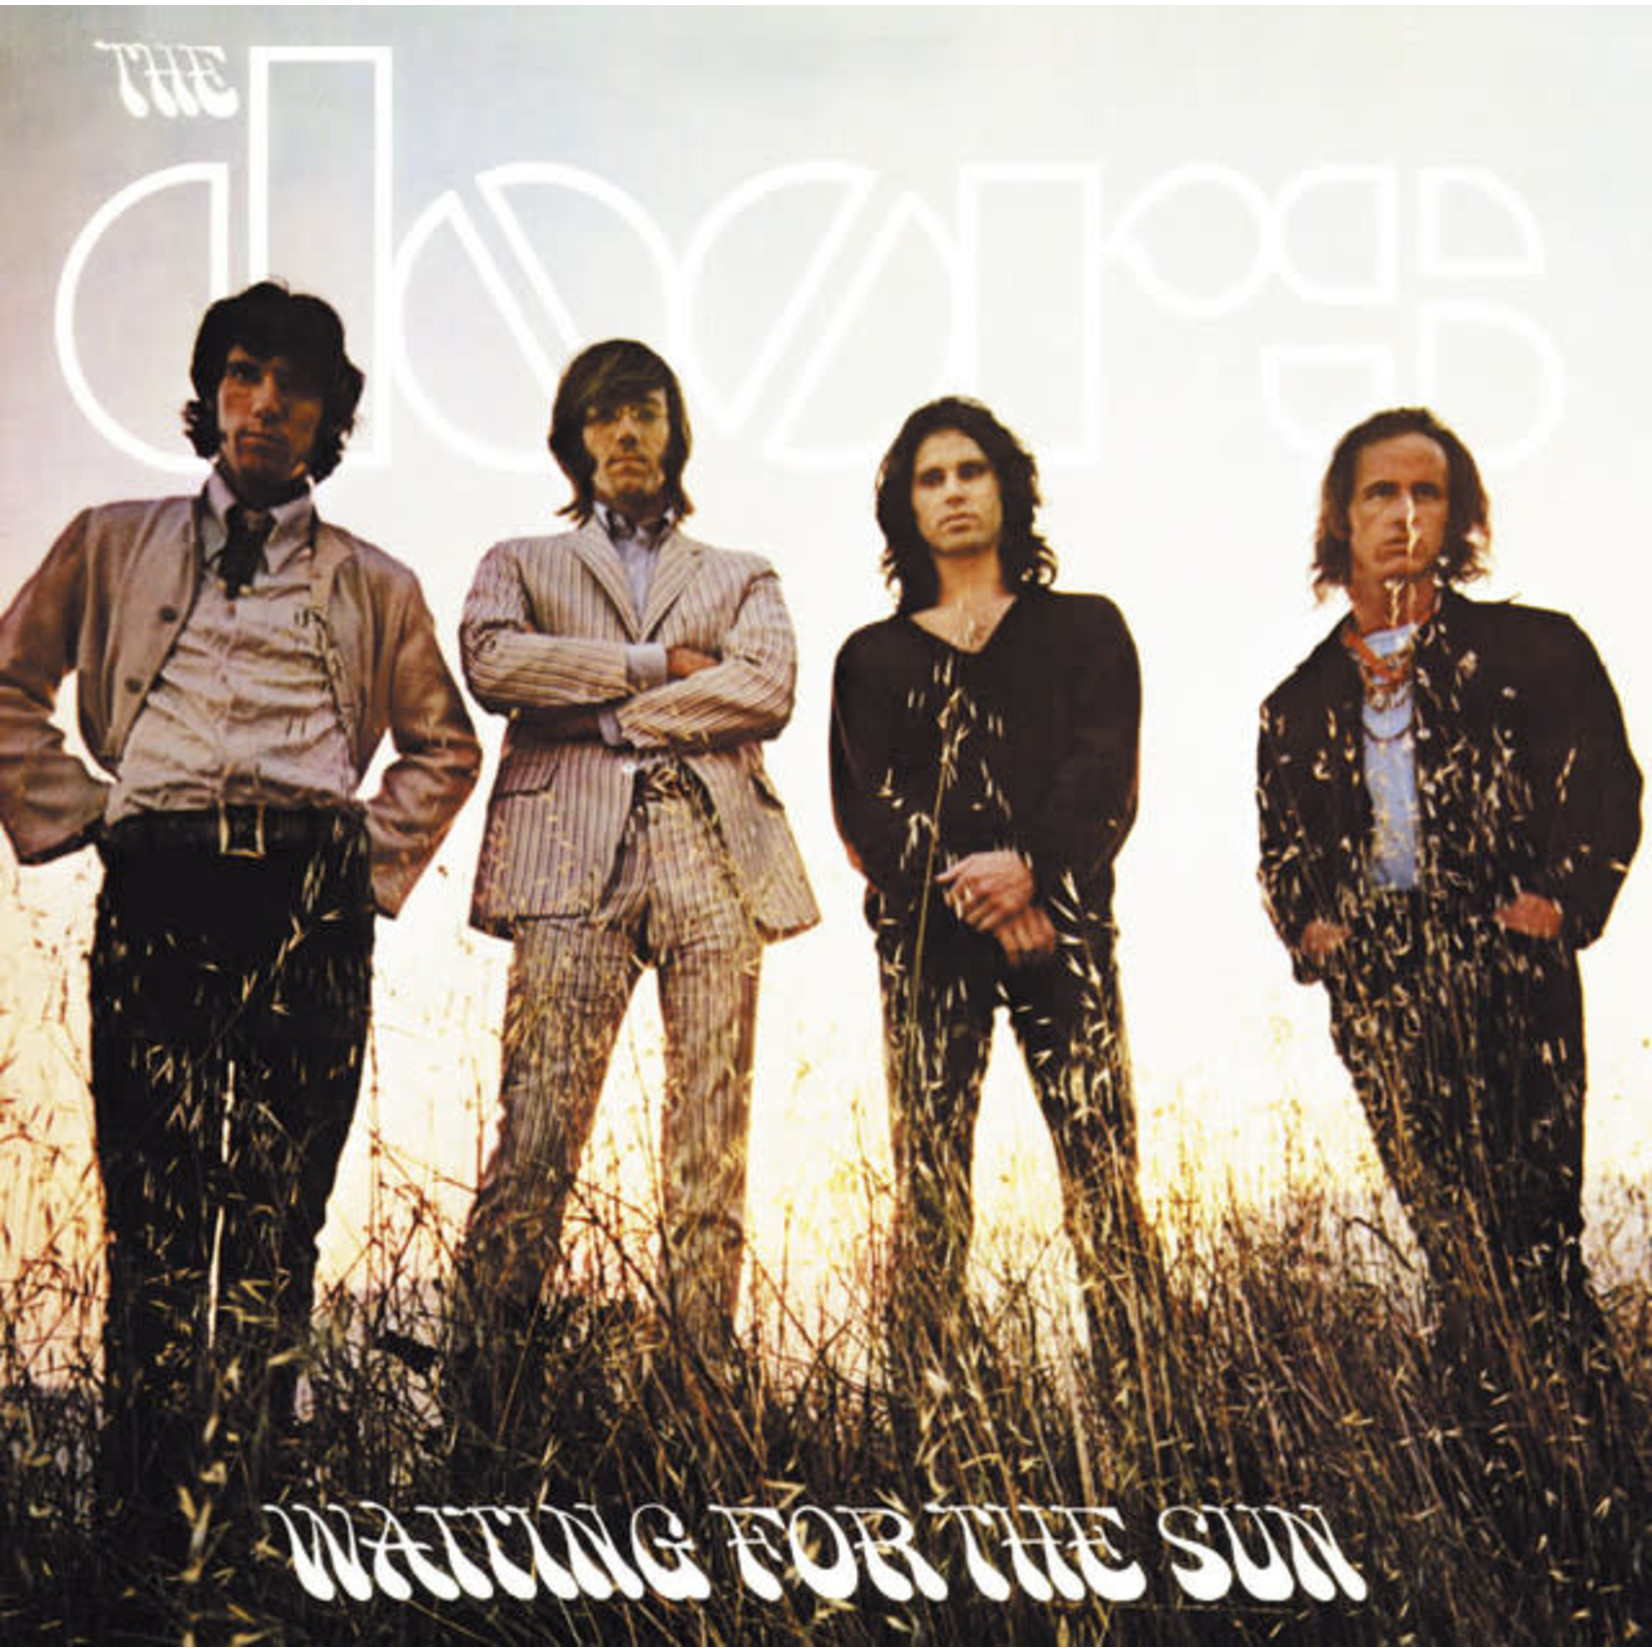 Vinyl The Doors - Waiting For The Sun